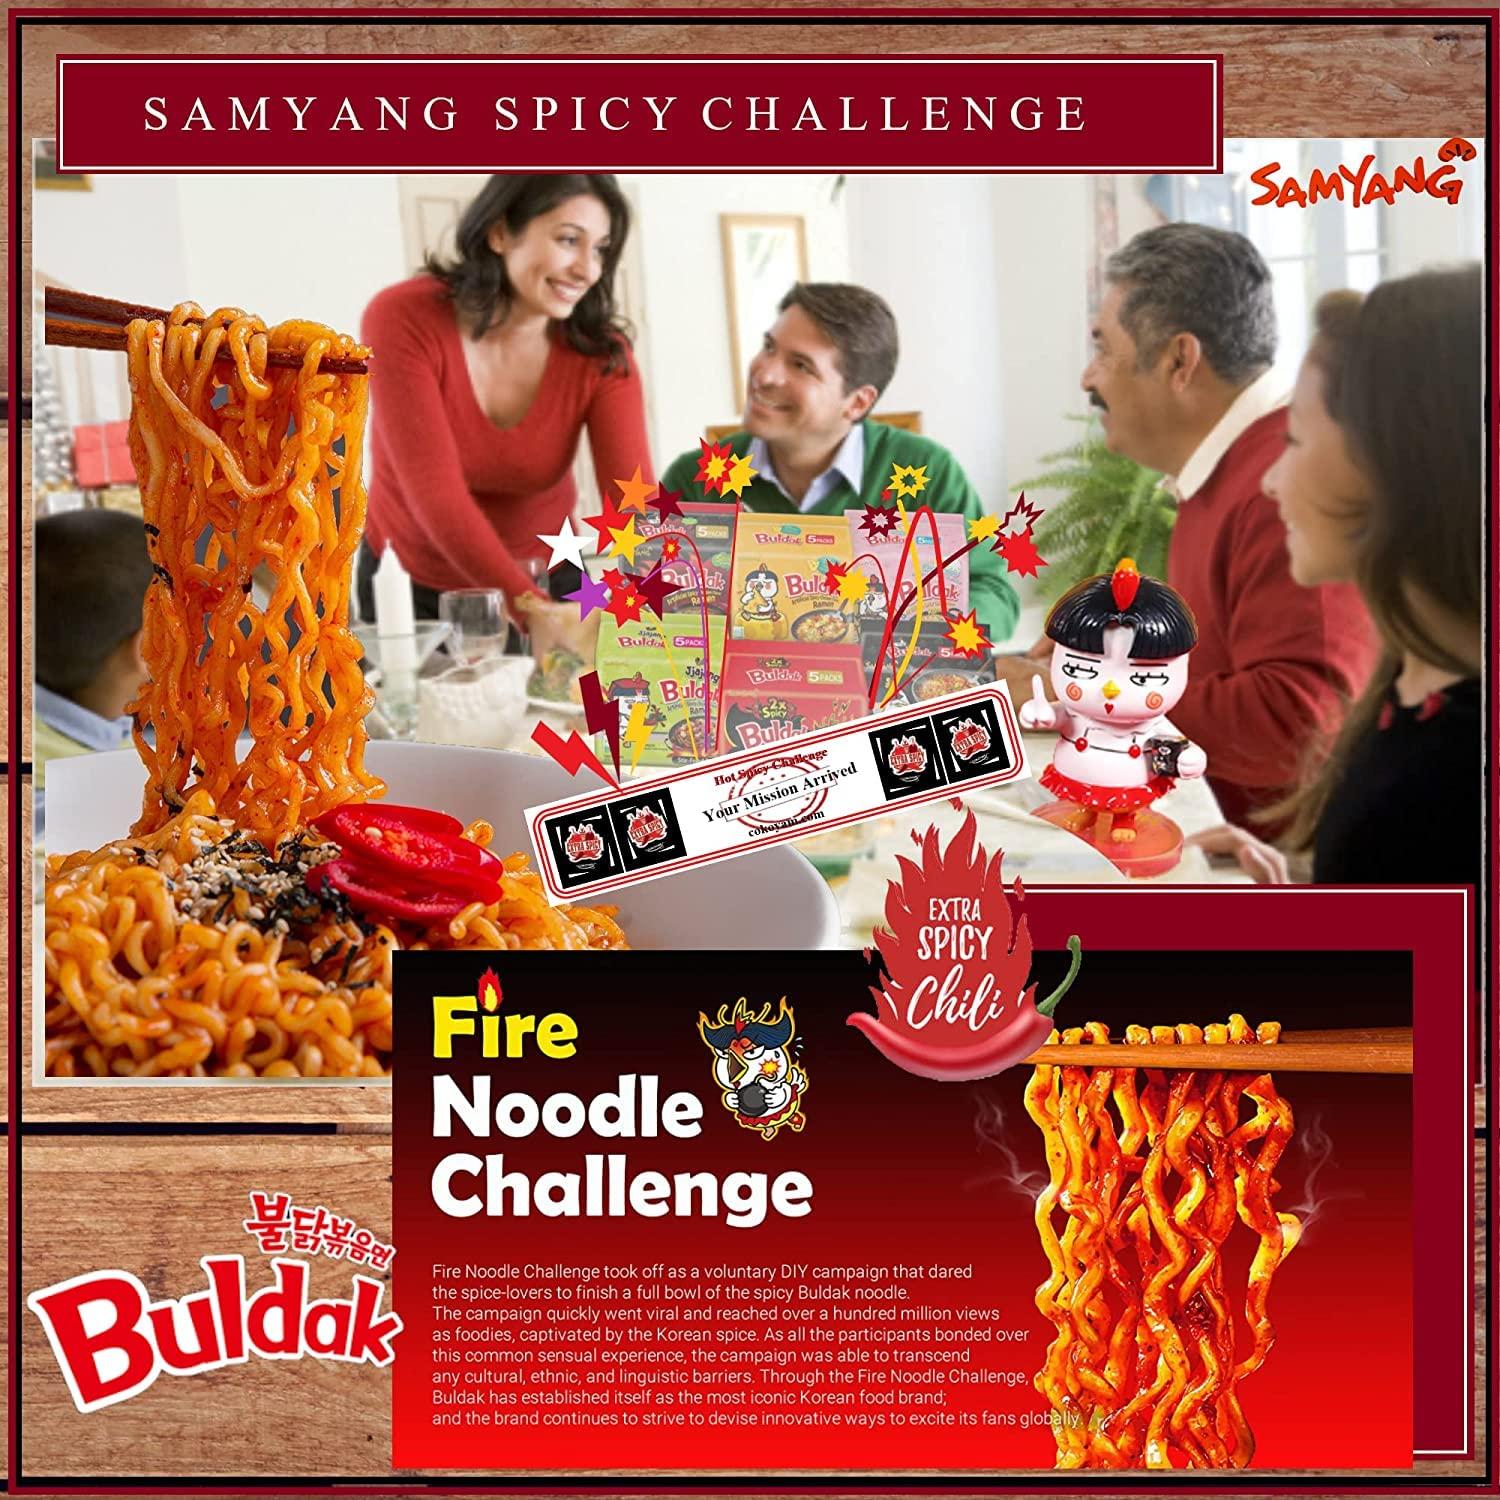 Samyang Foods' Buldak Hot Chicken Flavor Ramen to Sponsor 2022 MAMA AWARDS